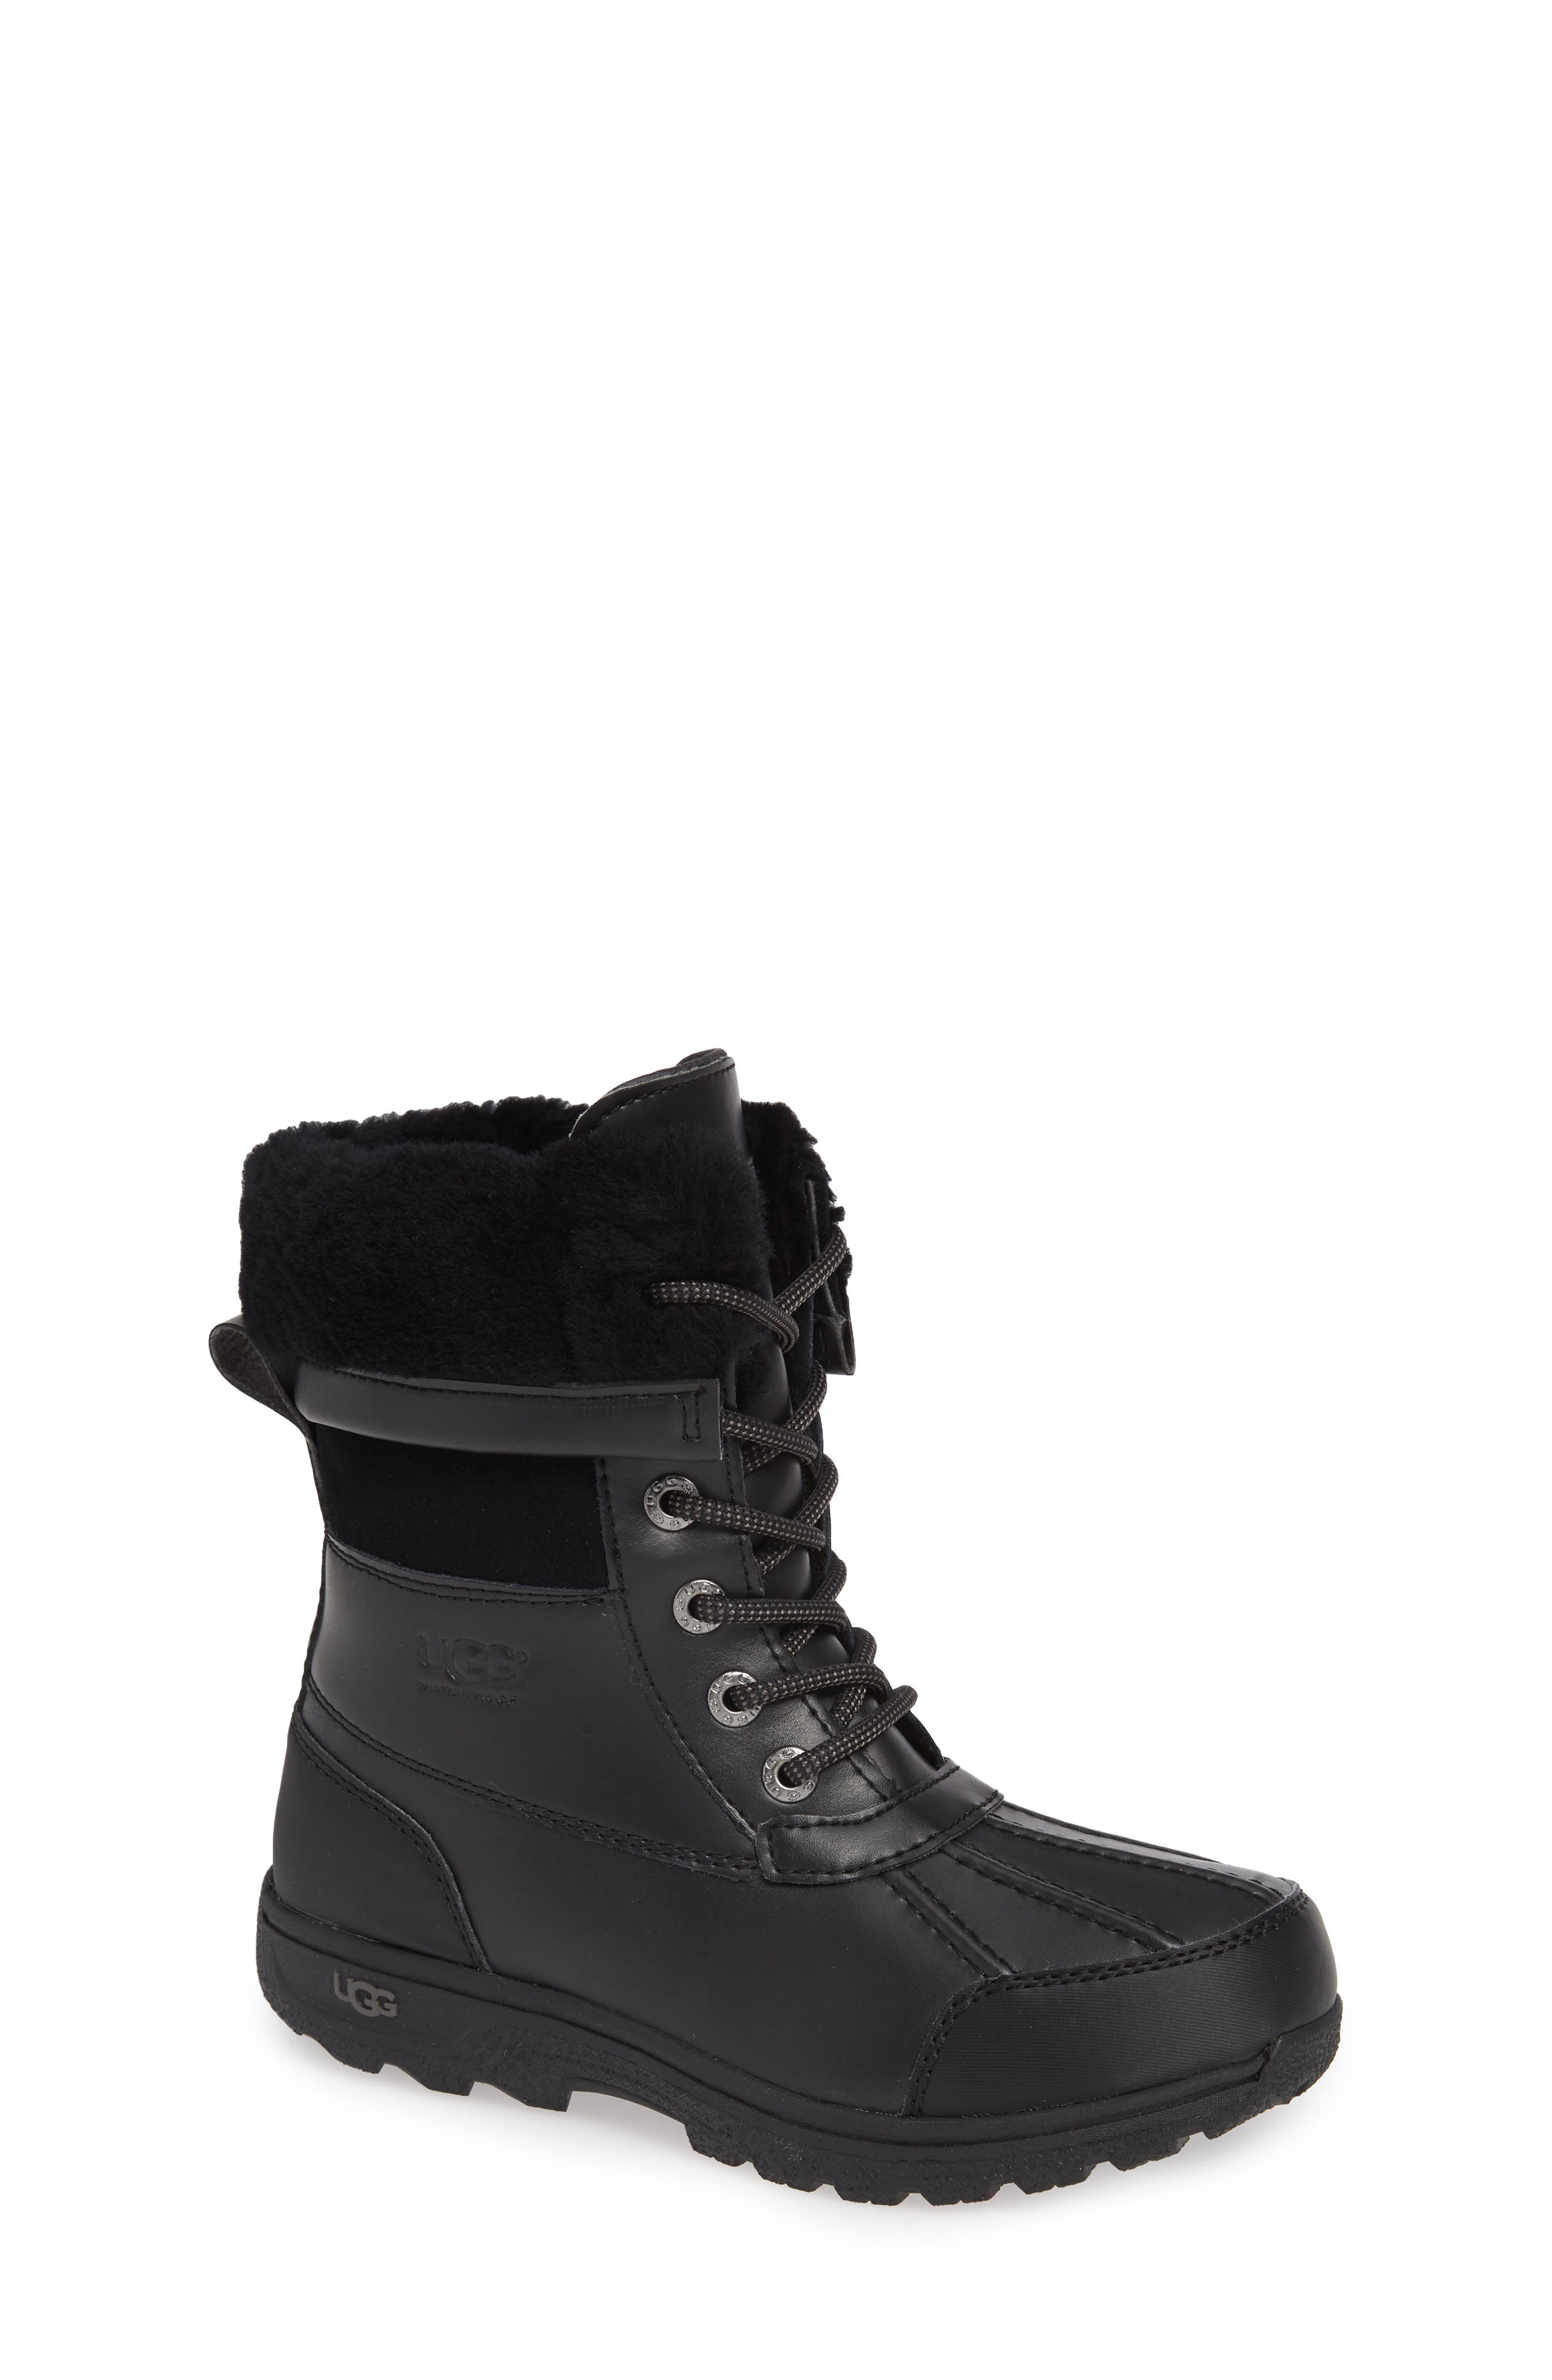 size 7.5 boys boots